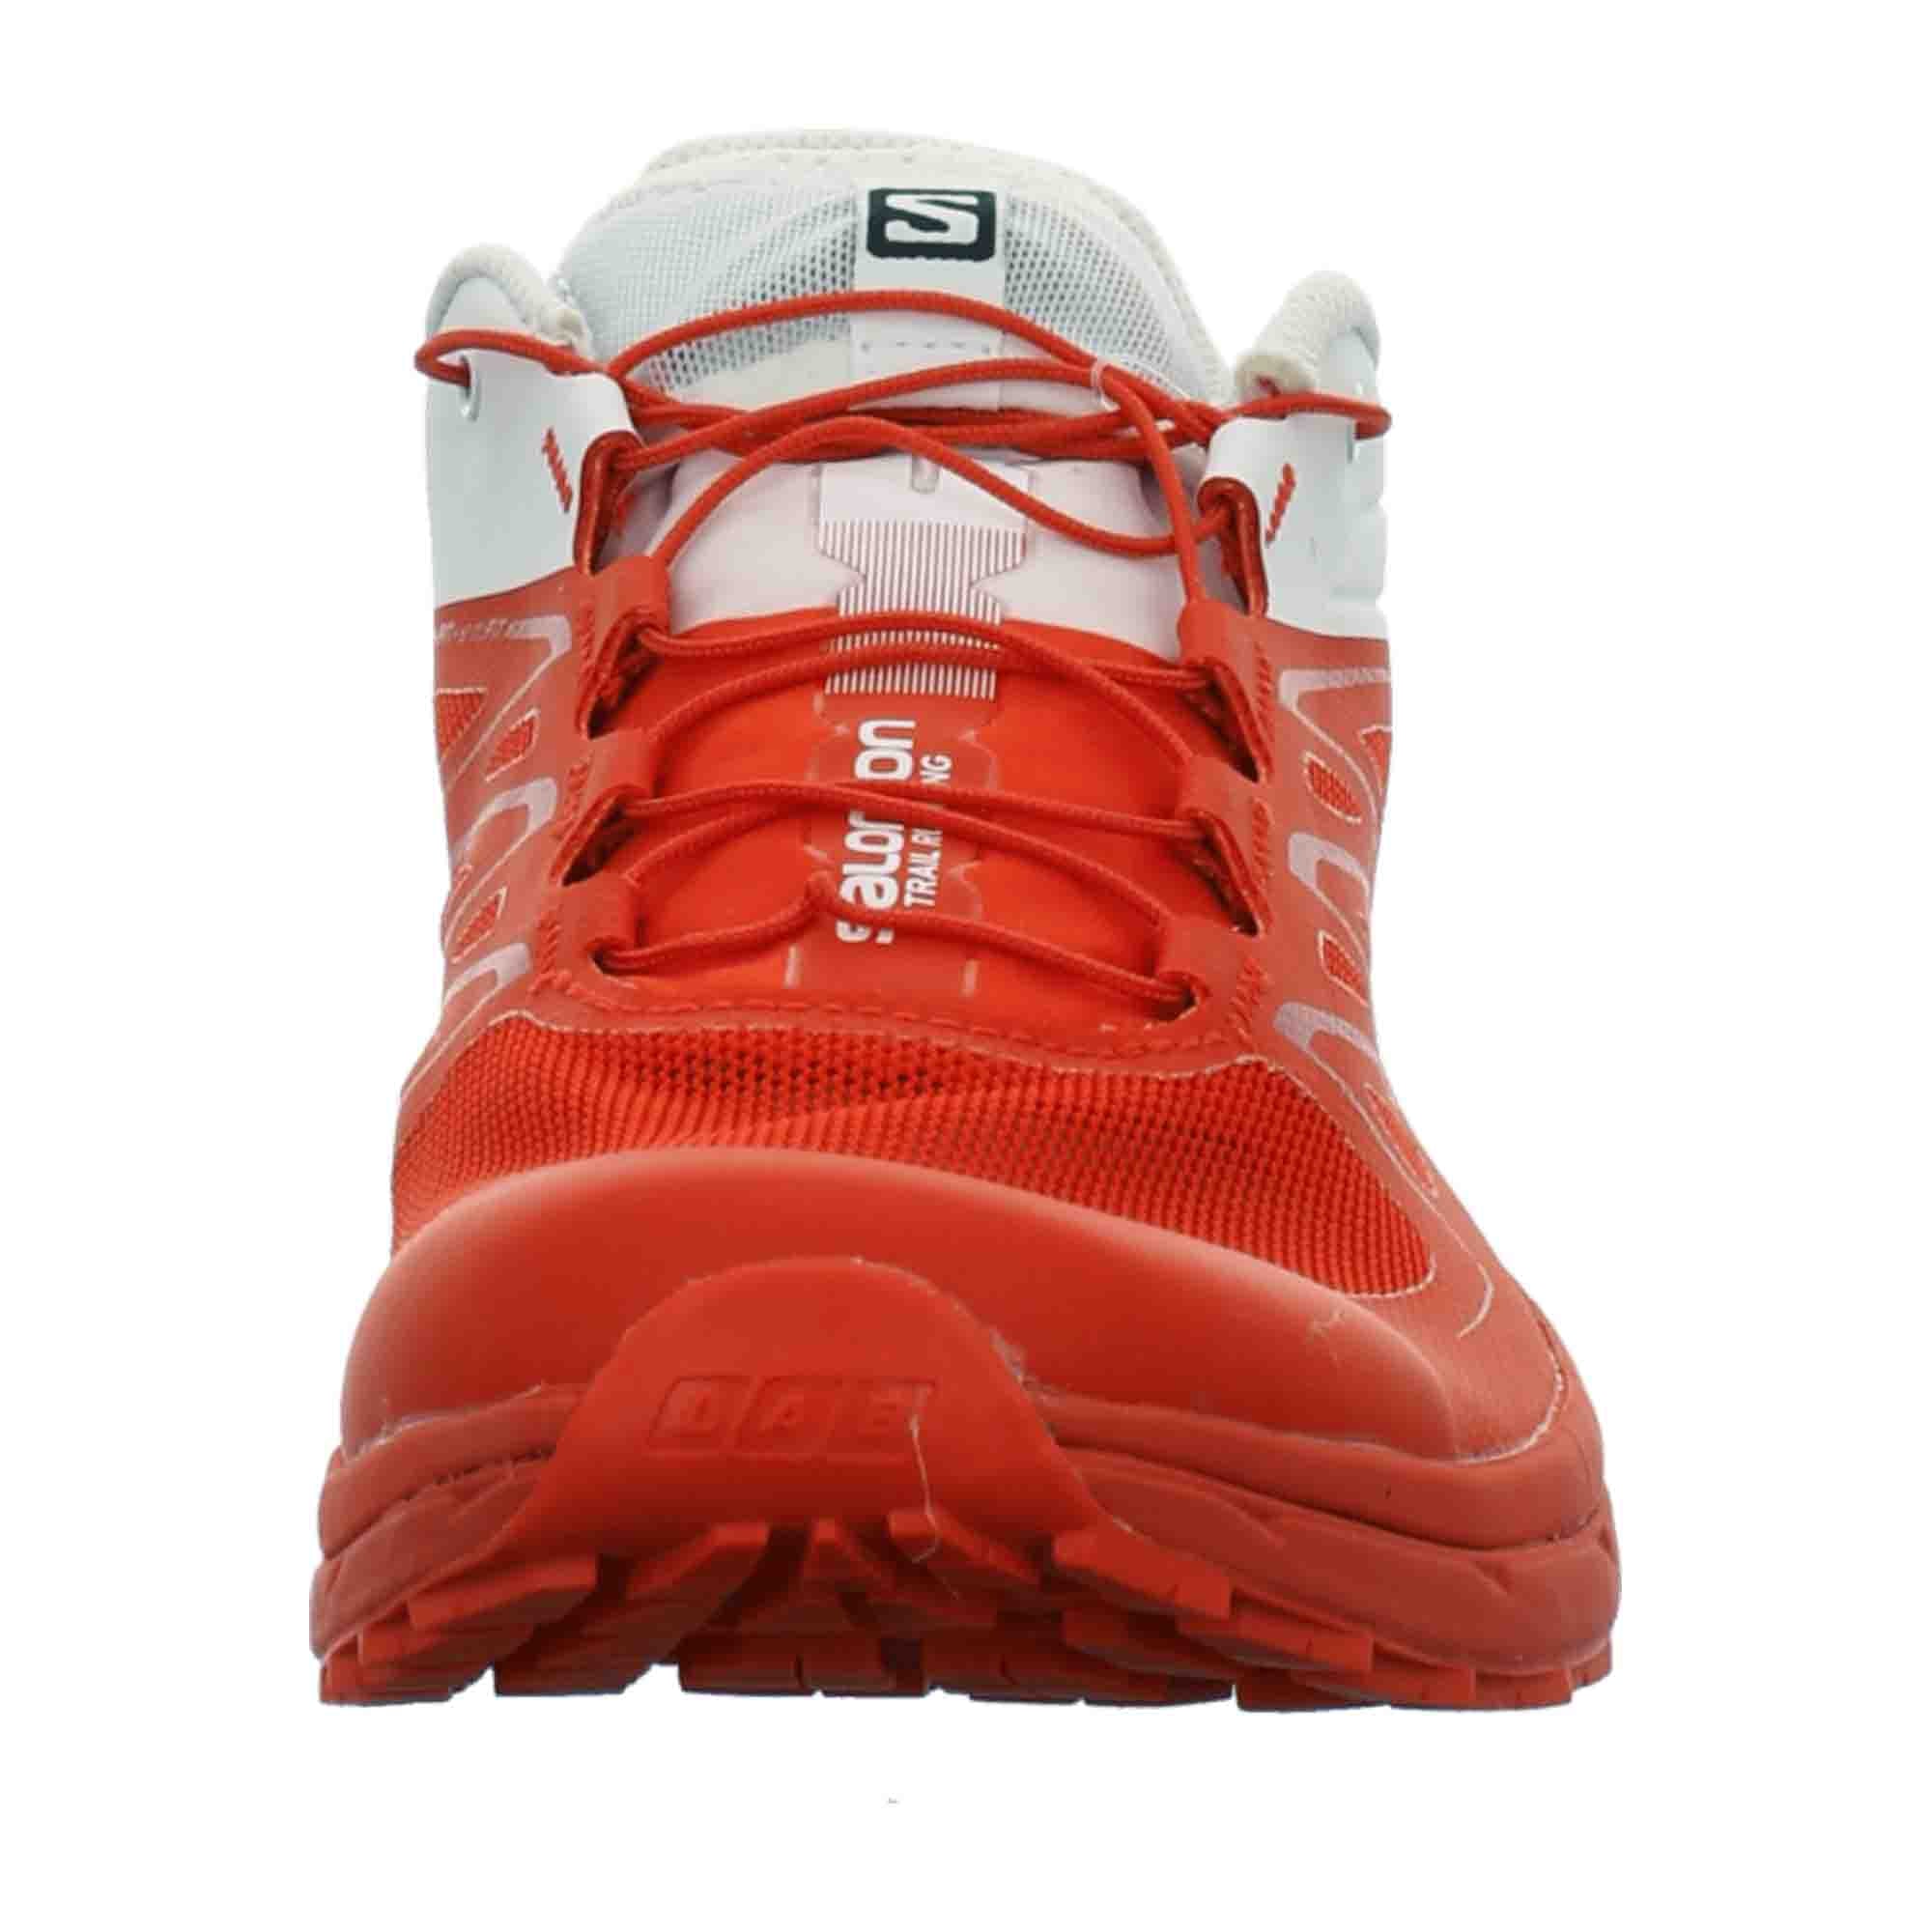 Salomon S-Lab Sense 5 Ultra for men, red, shoes